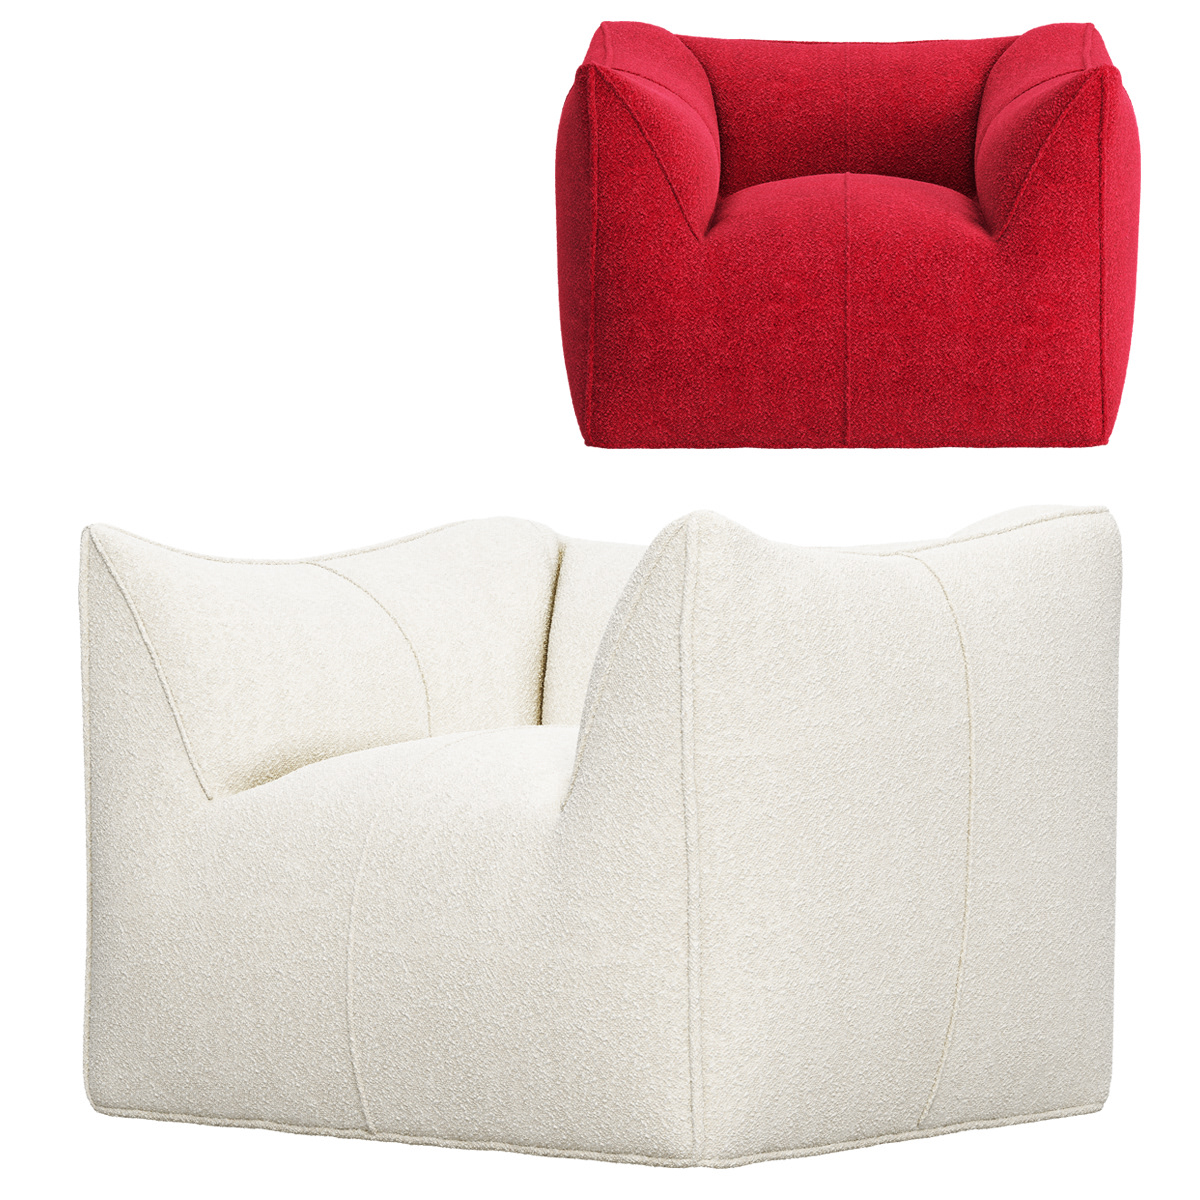 3ds max Render visualization 3D interior design  modern furniture design